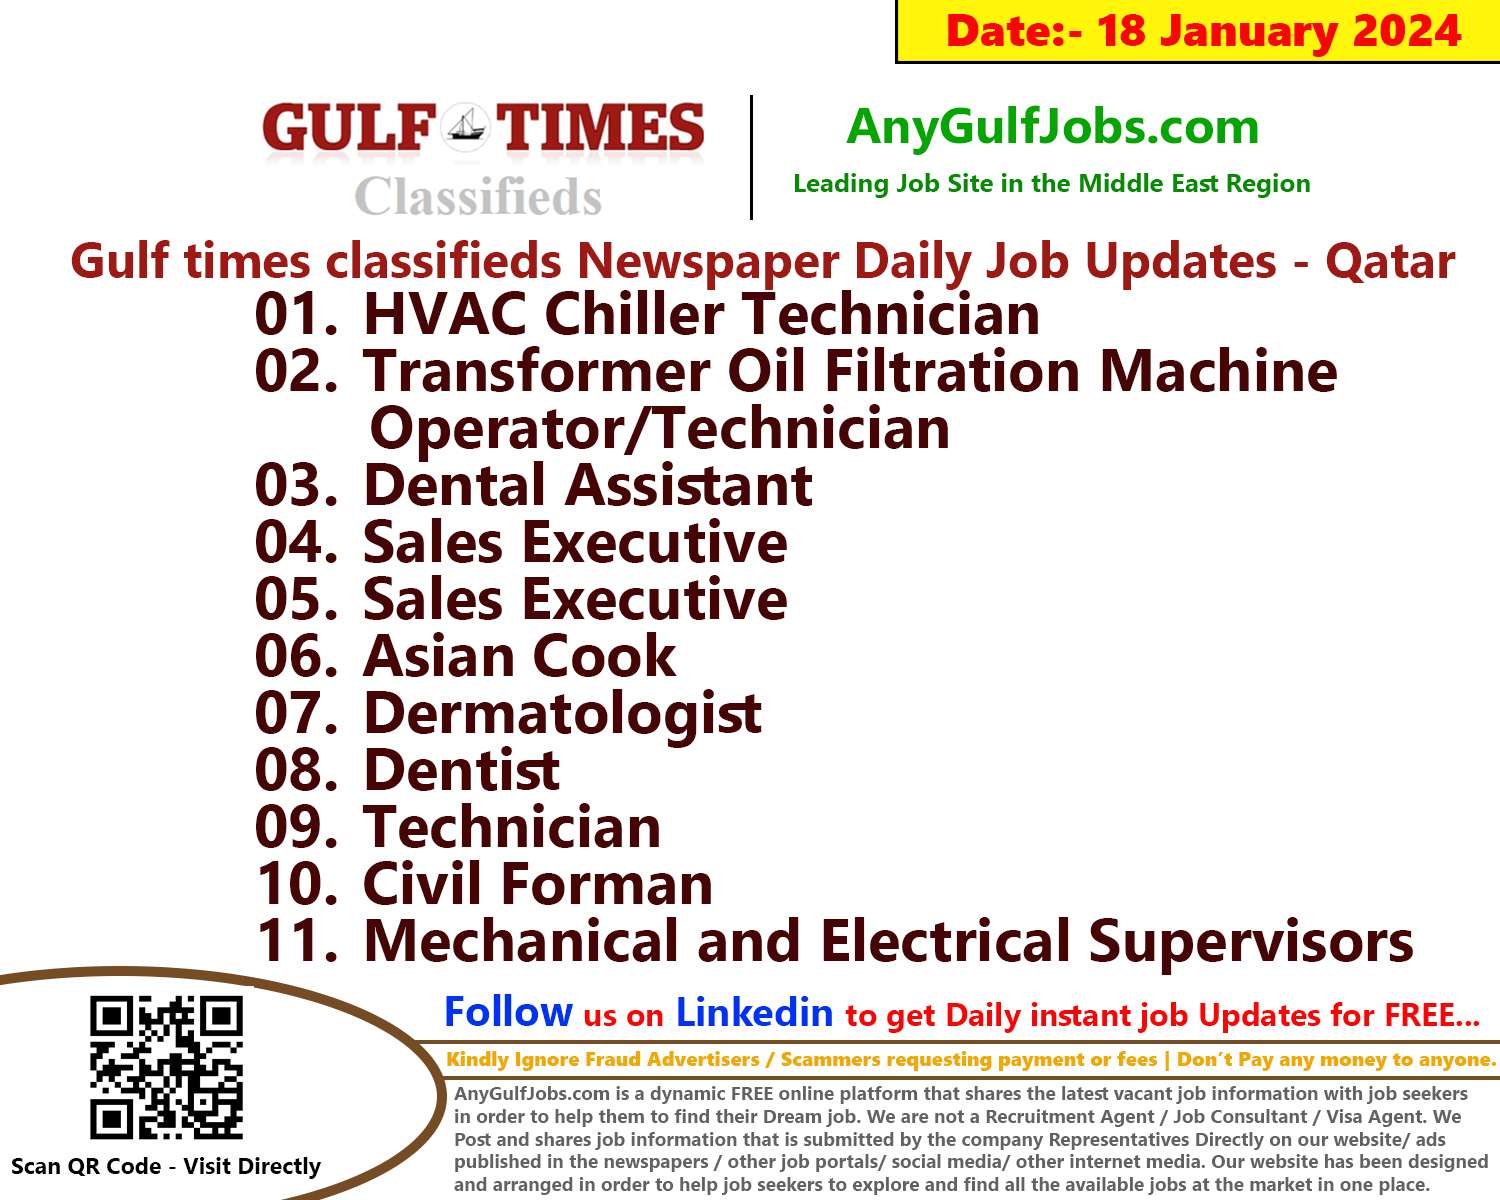 Gulf Times Classifieds Job Vacancies Qatar - 18 January 2024